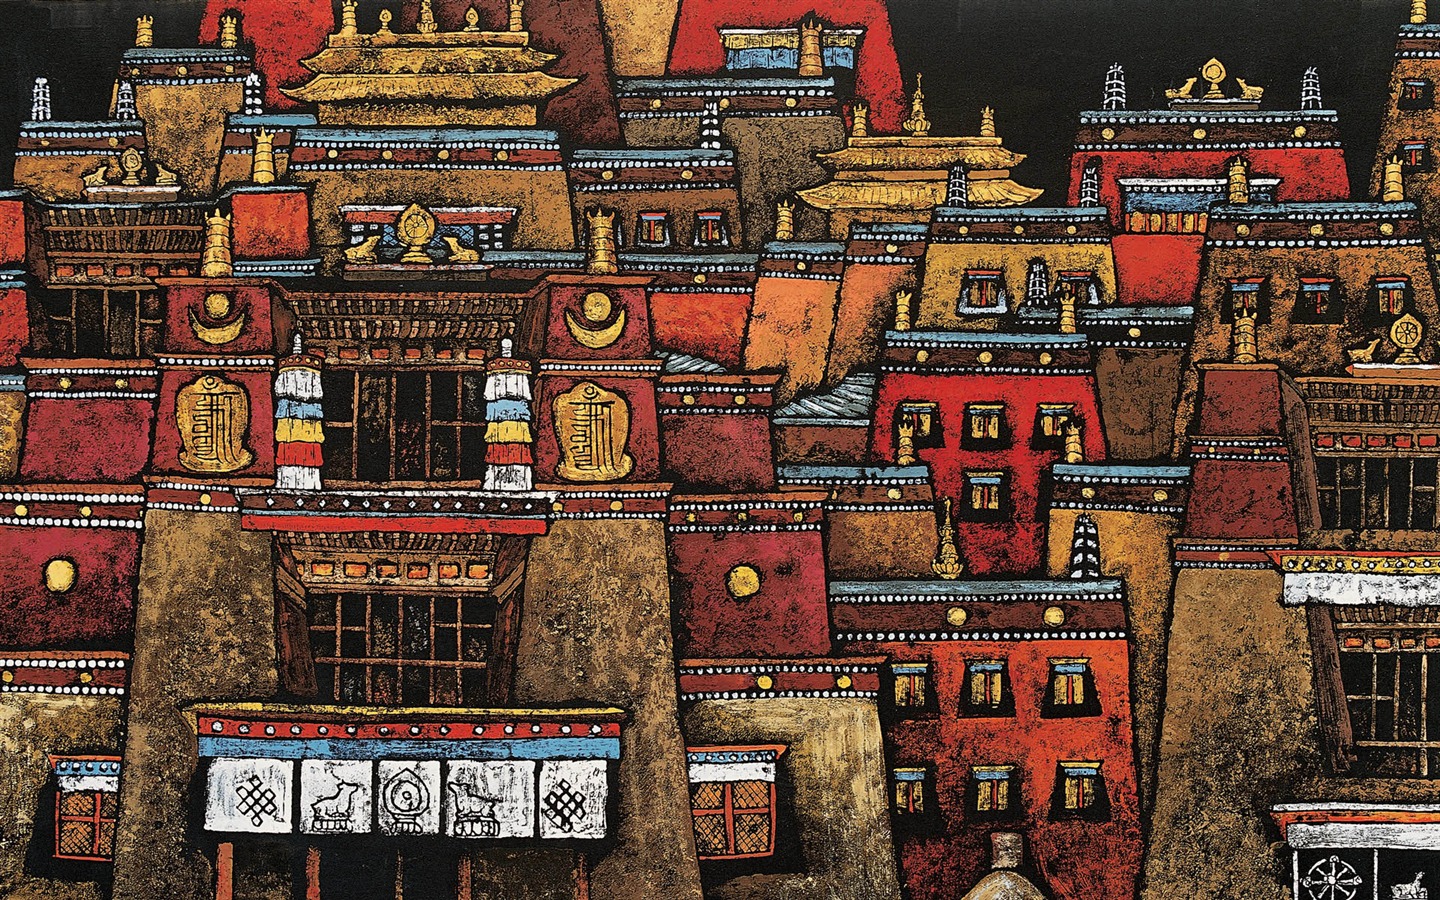 Cheung Pakistan fond d'écran d'impression du Tibet (1) #18 - 1440x900